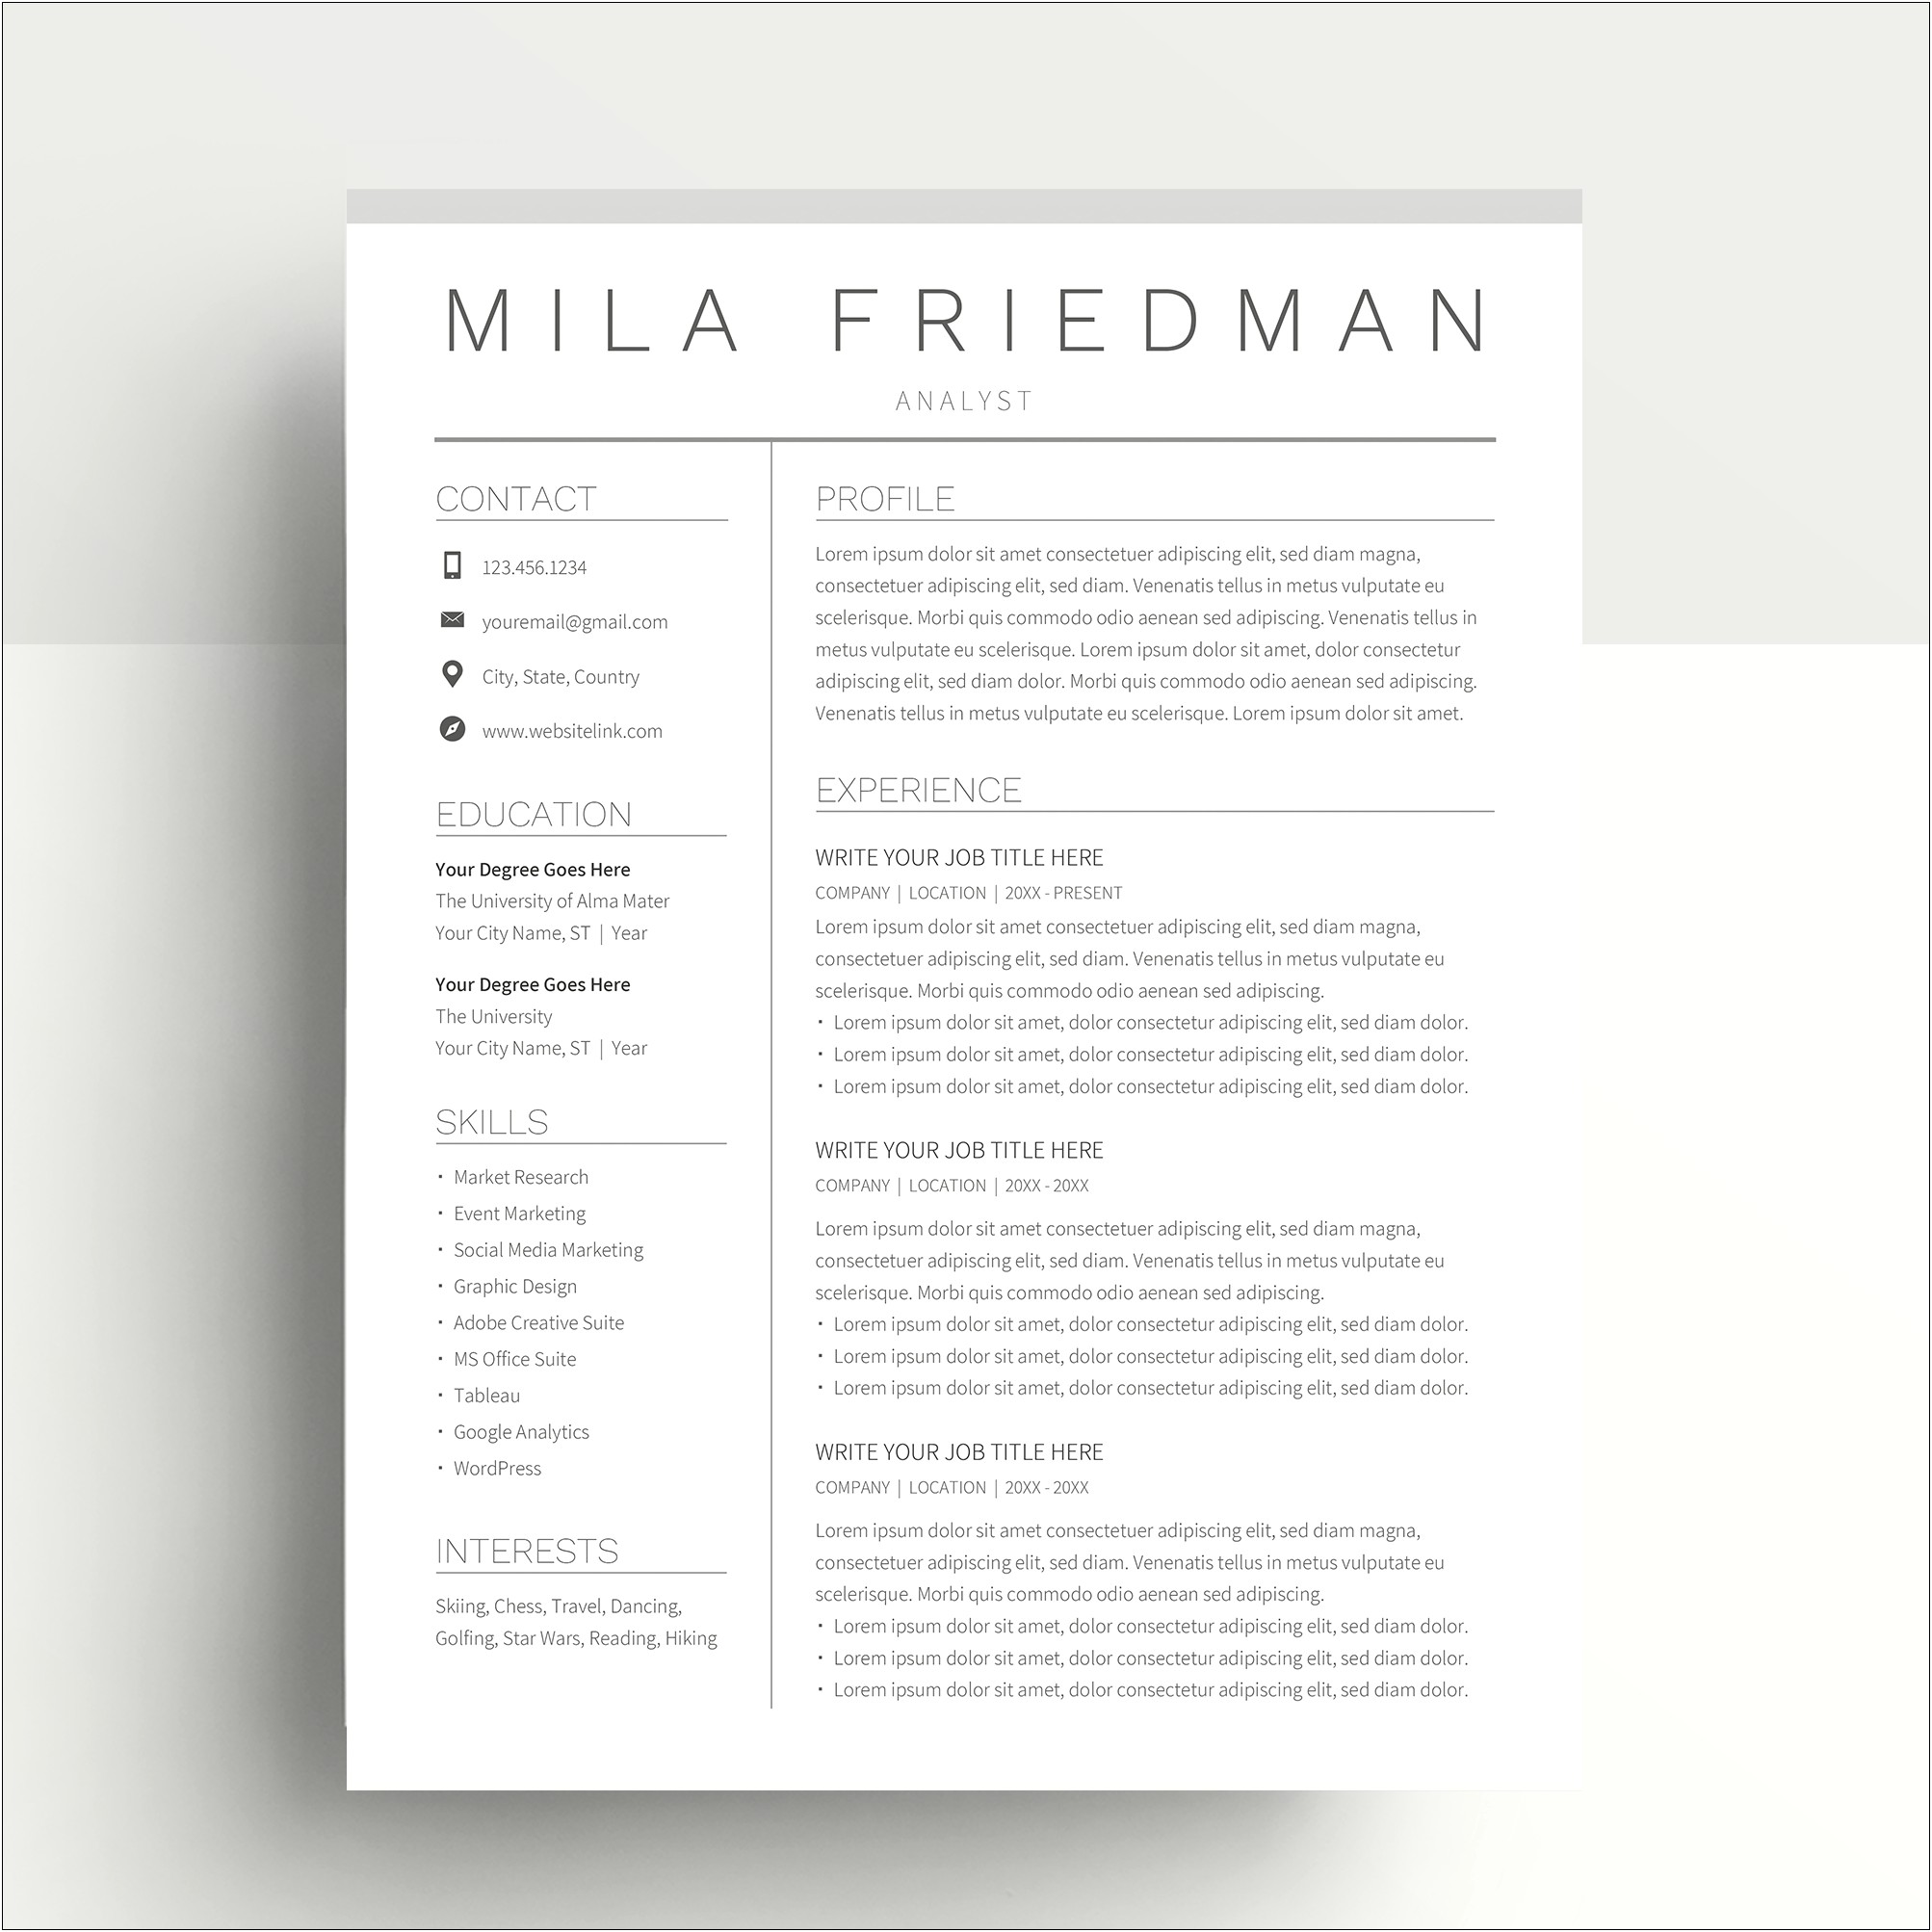 Mila Friedman Resume Template Free